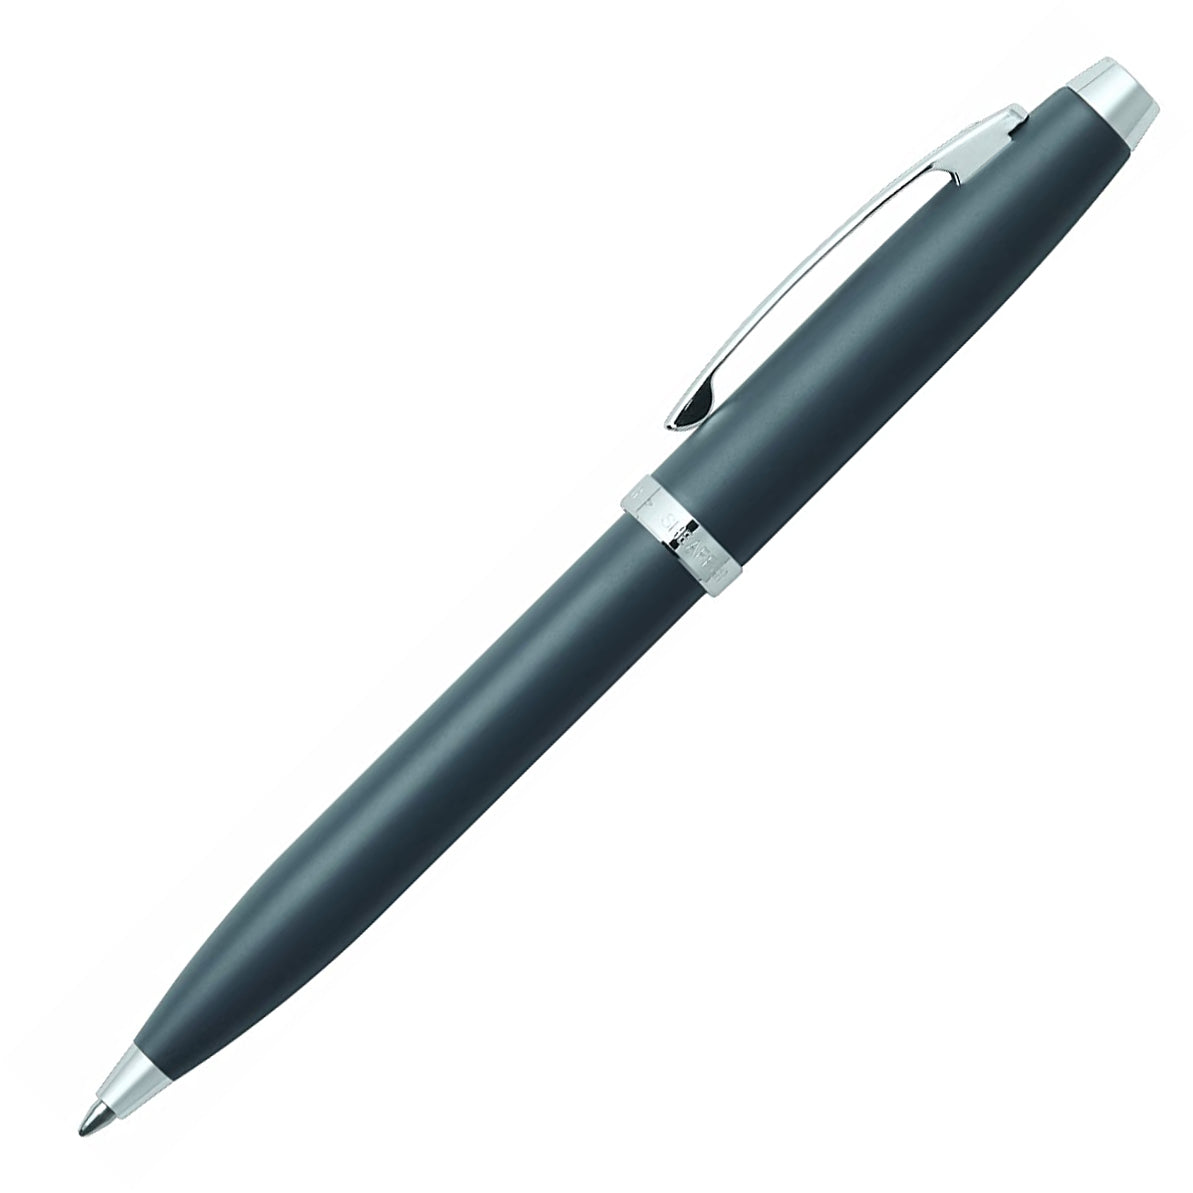 Sheaffer 100 9319-2 Ballpoint Pen in Matte Grey